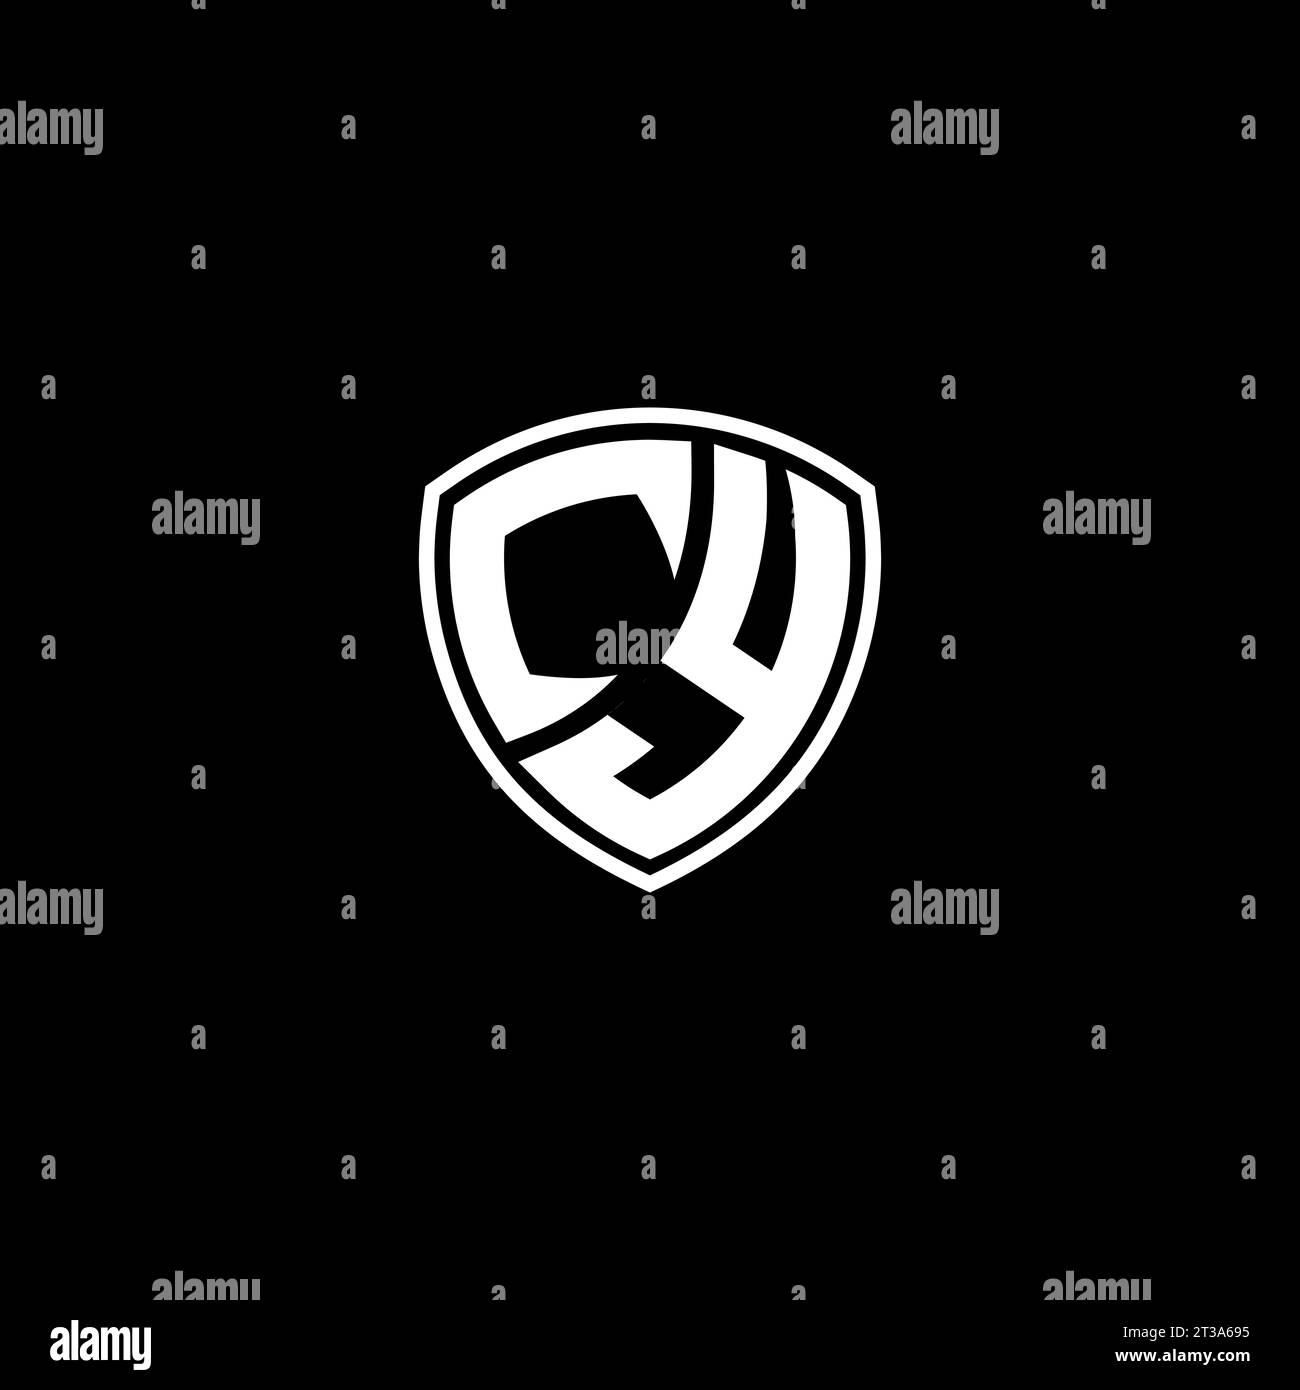 CY logo monogram emblem style with shield shape design template ideas Stock Vector